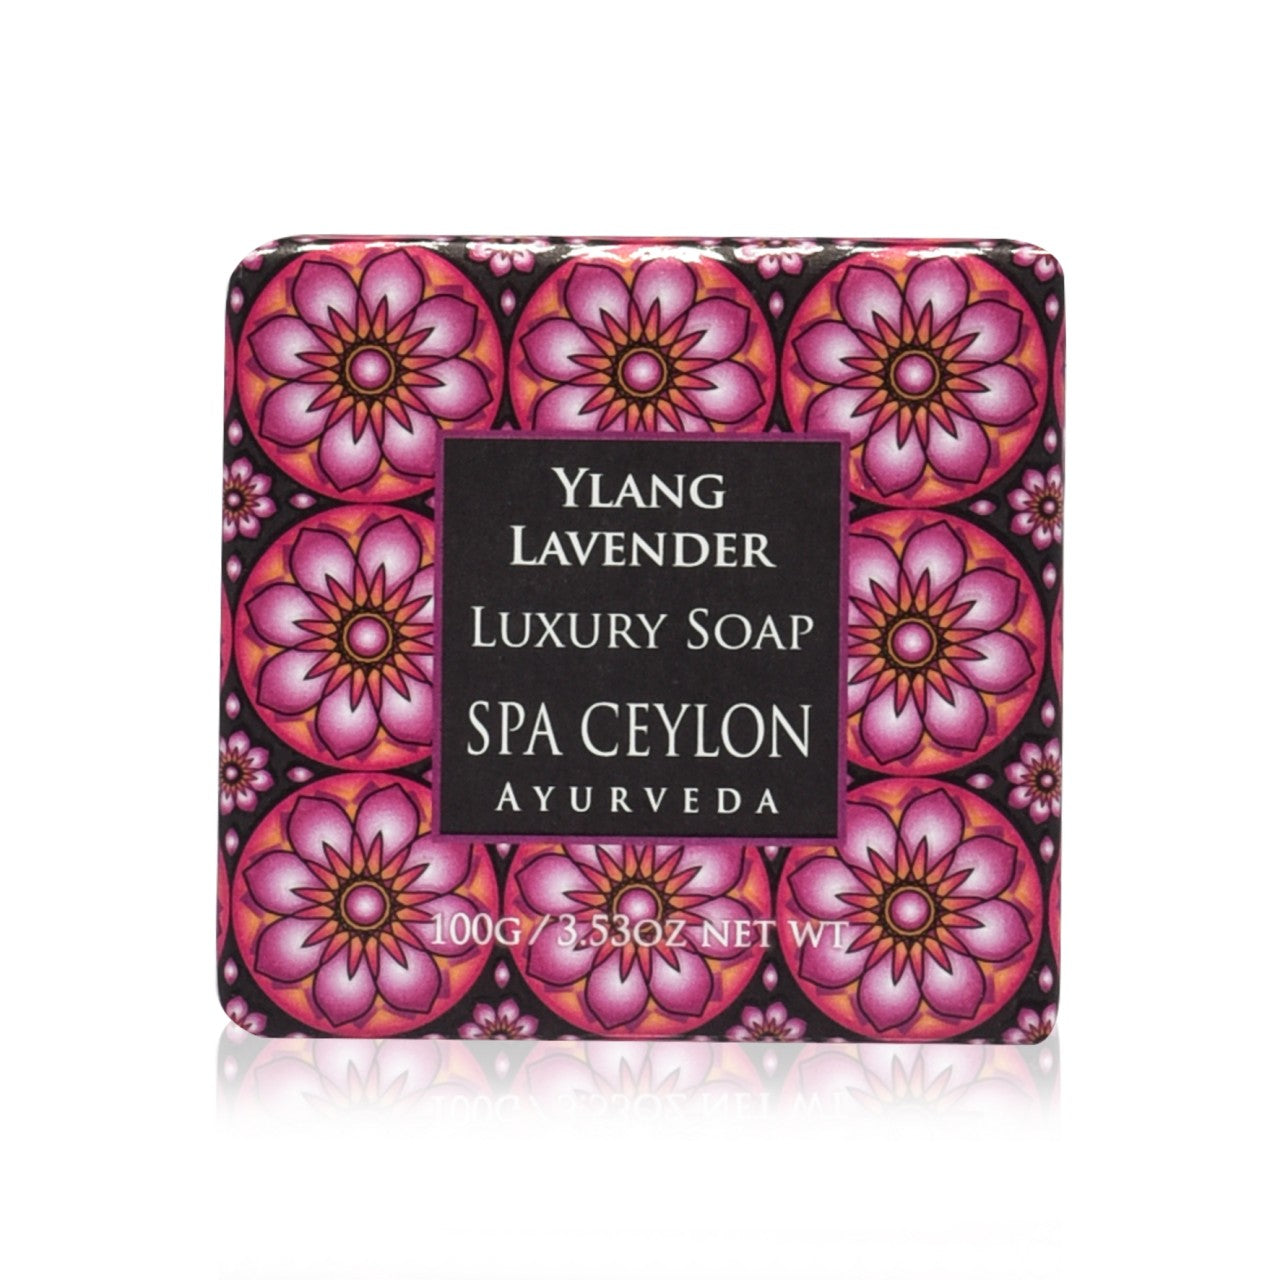 Ylang Lavender Luxury Soap